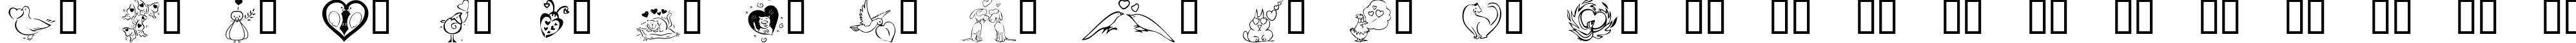 Пример написания английского алфавита шрифтом KR Valentines 2006 Three